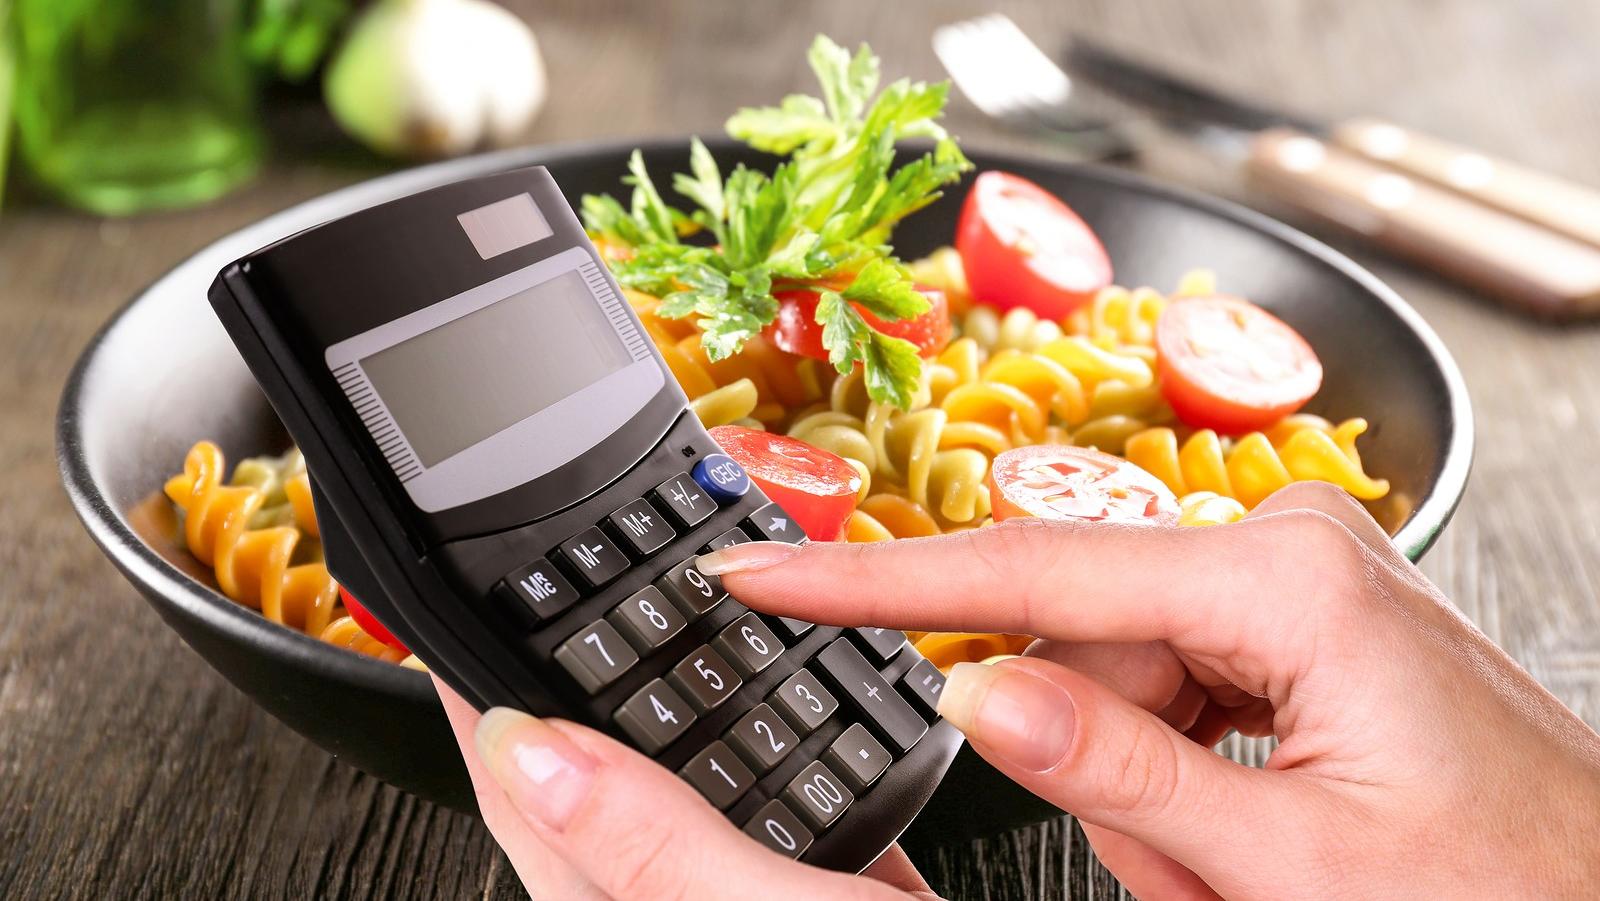 Napi kalóriaszükséglet kalkulátor | lifestylecom.hu